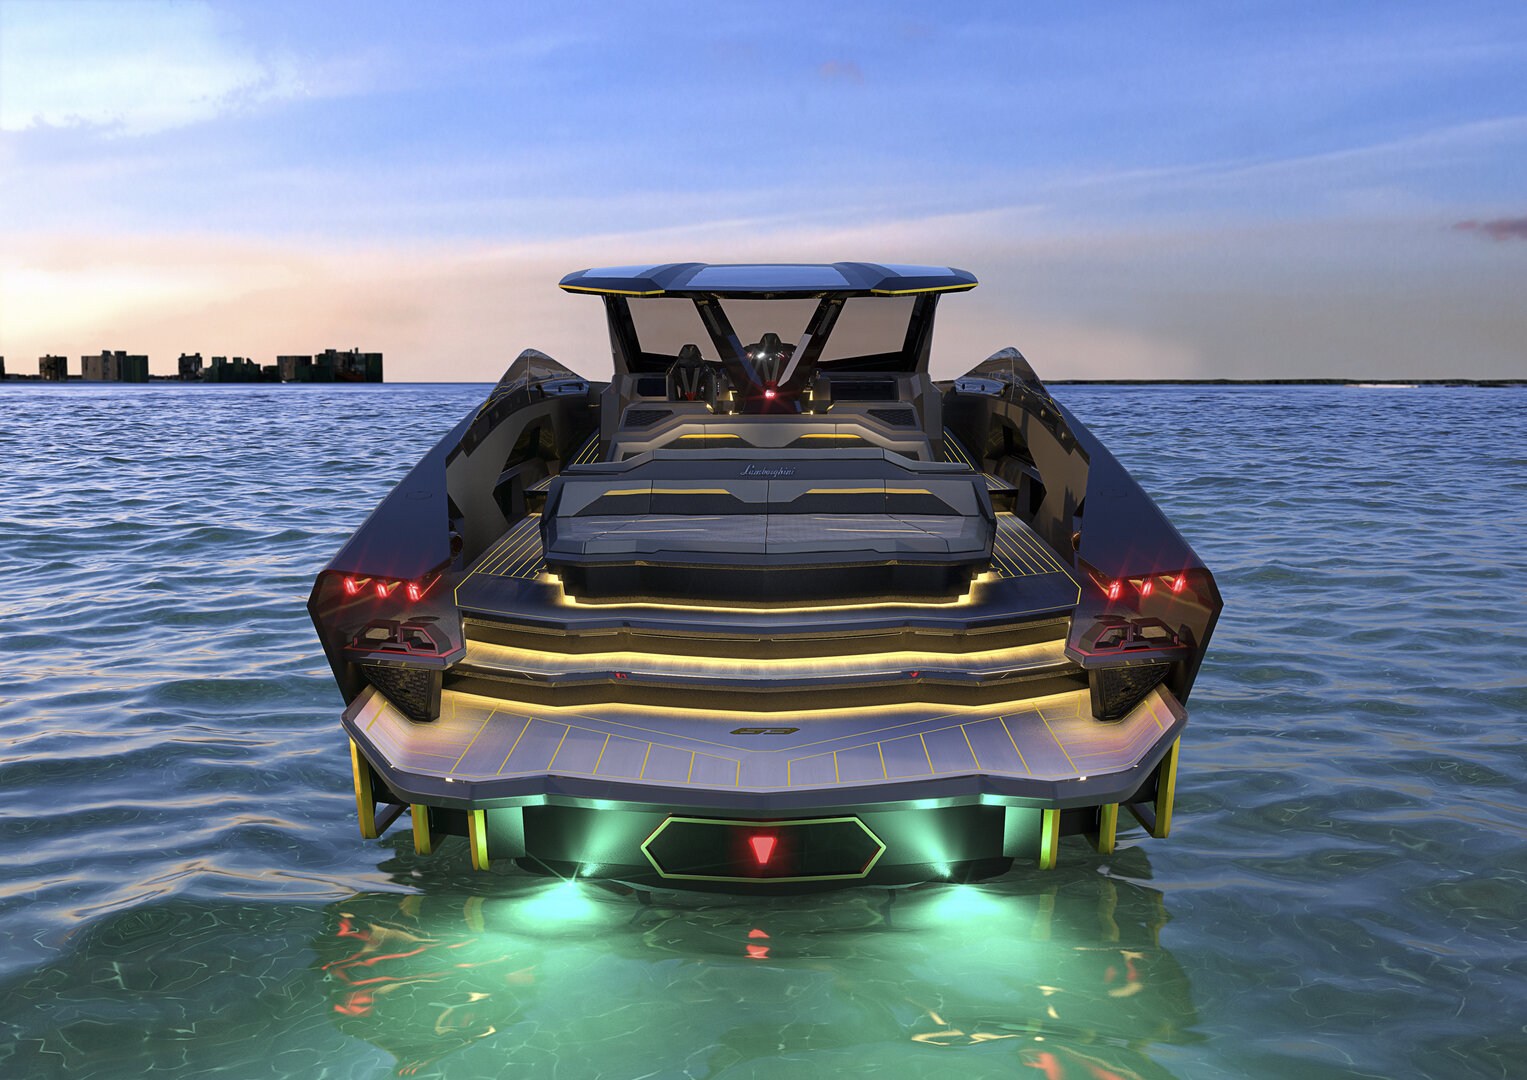 Tecnomar for Lamborghini 63, lujo a nivel del mar